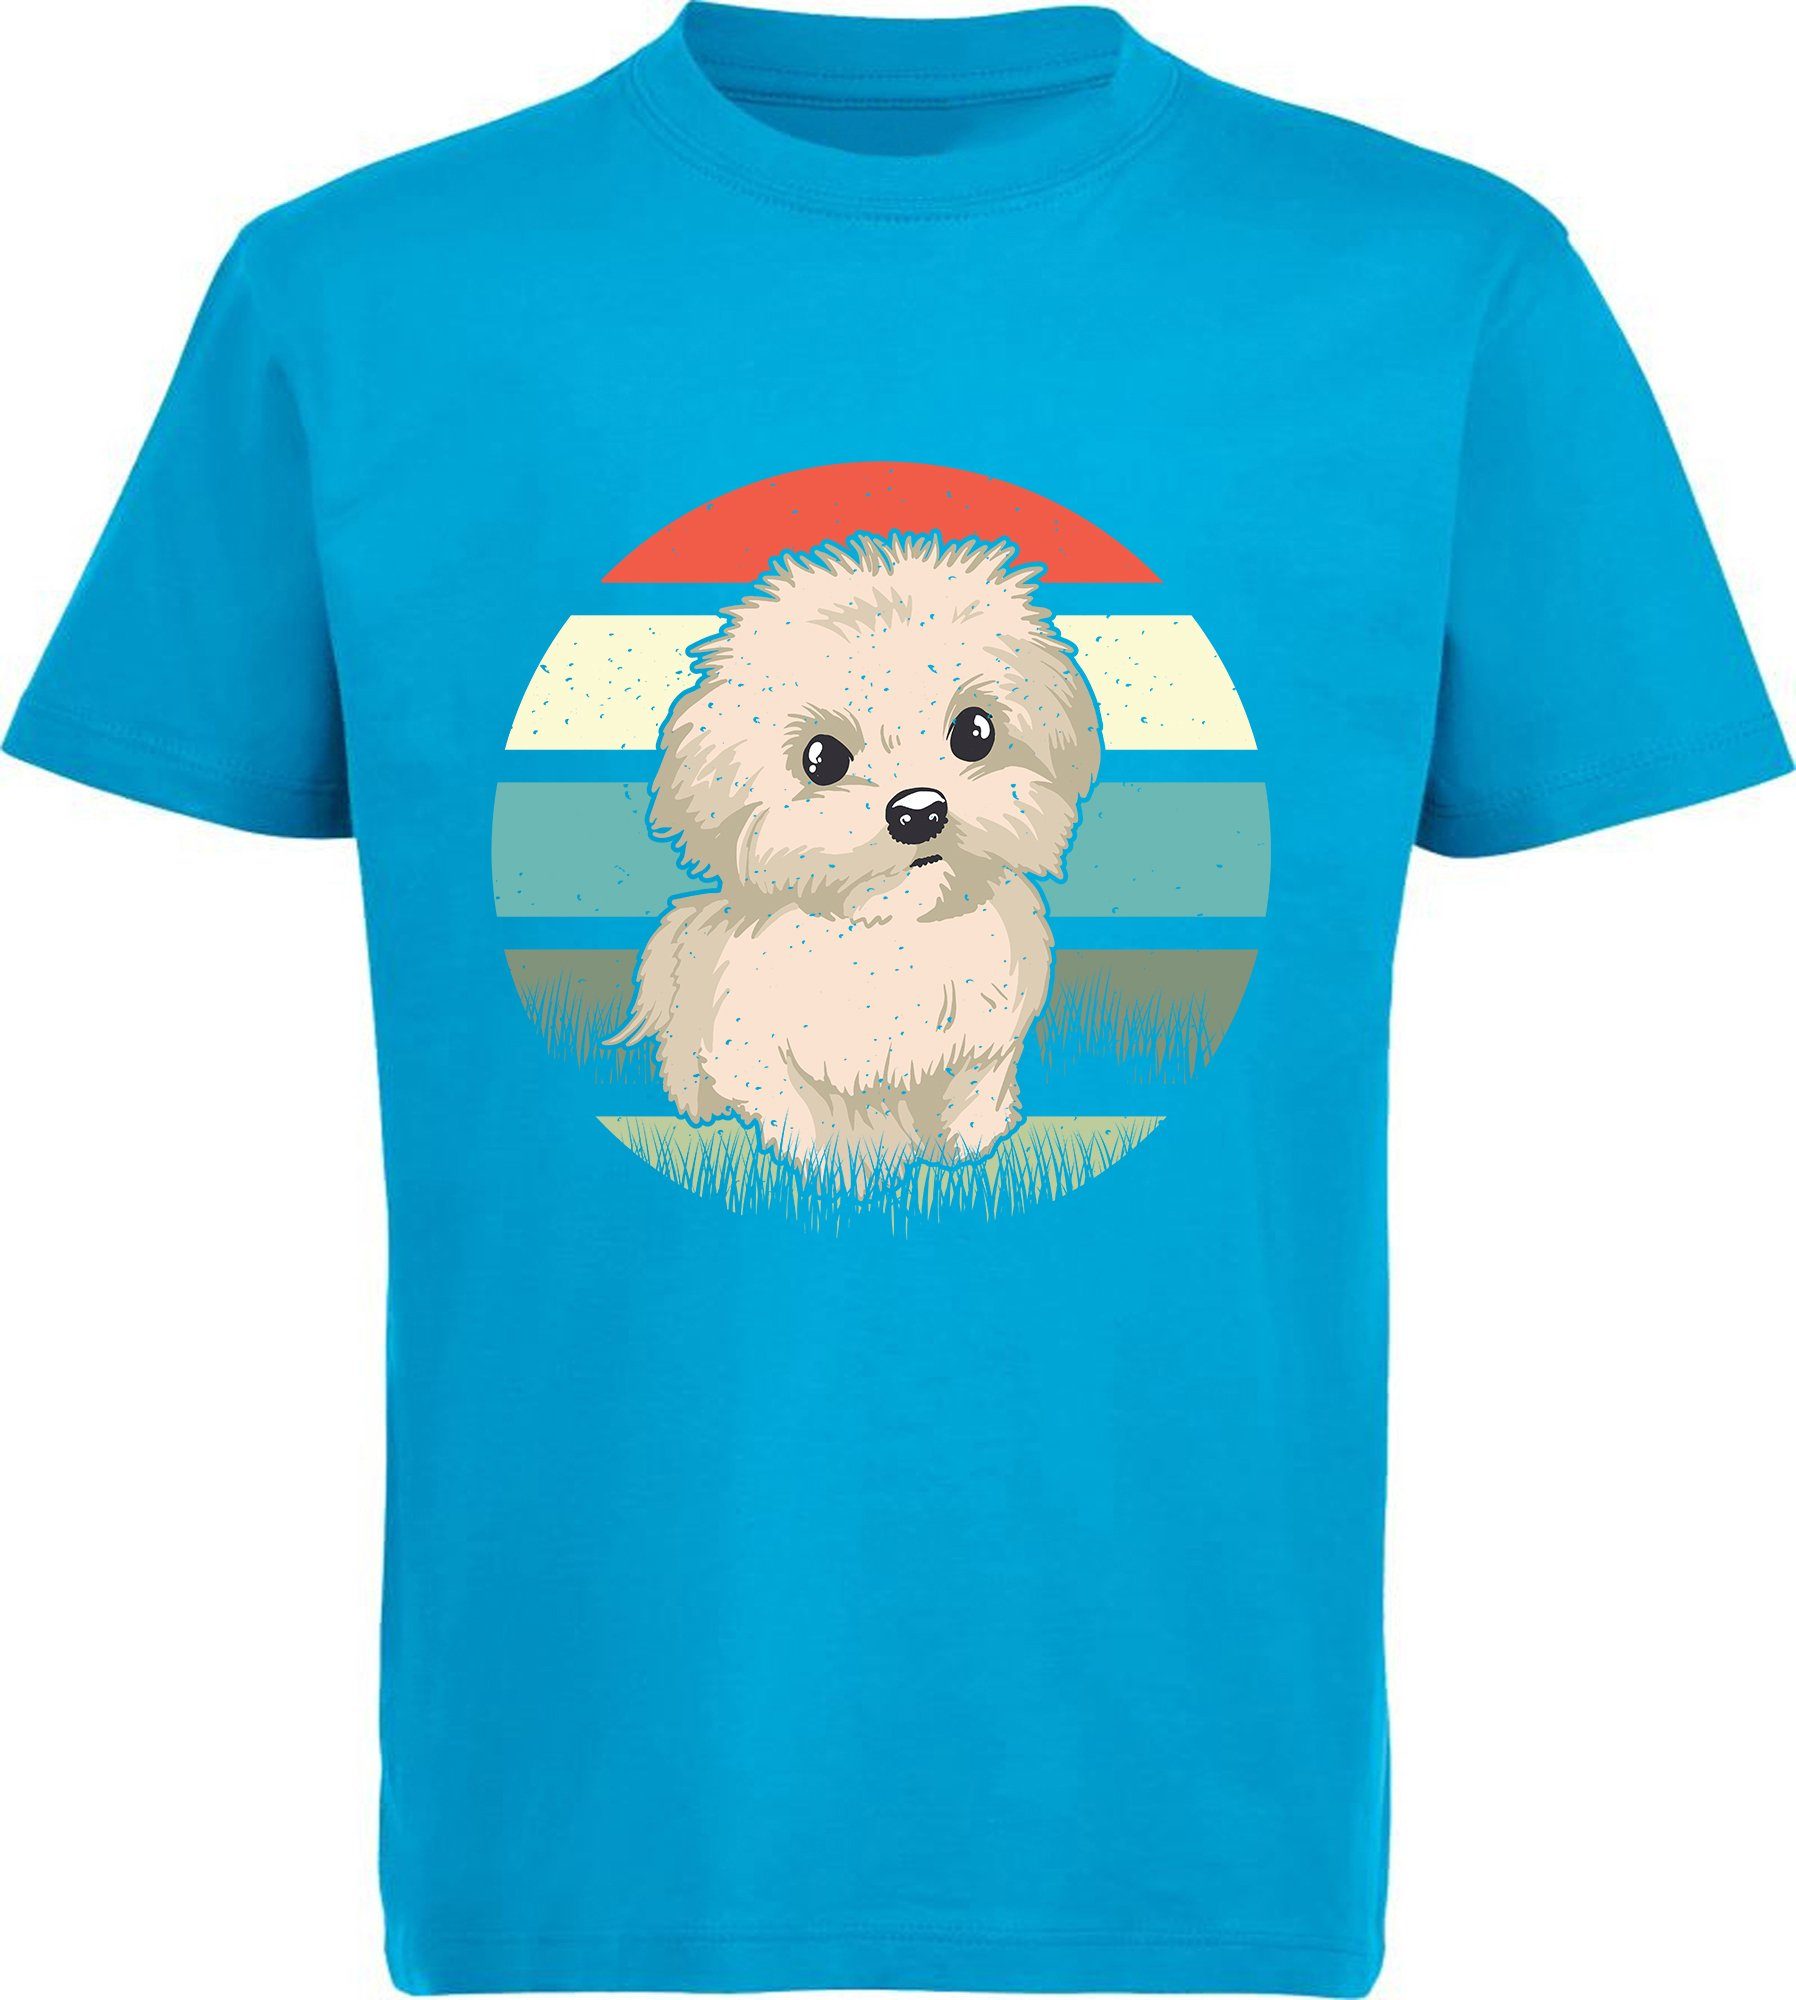 MyDesign24 Print-Shirt Kinder Hunde - i242 Retro T-Shirt Baumwollshirt bedruckt mit Aufdruck, blau aqua Welpen Malteser